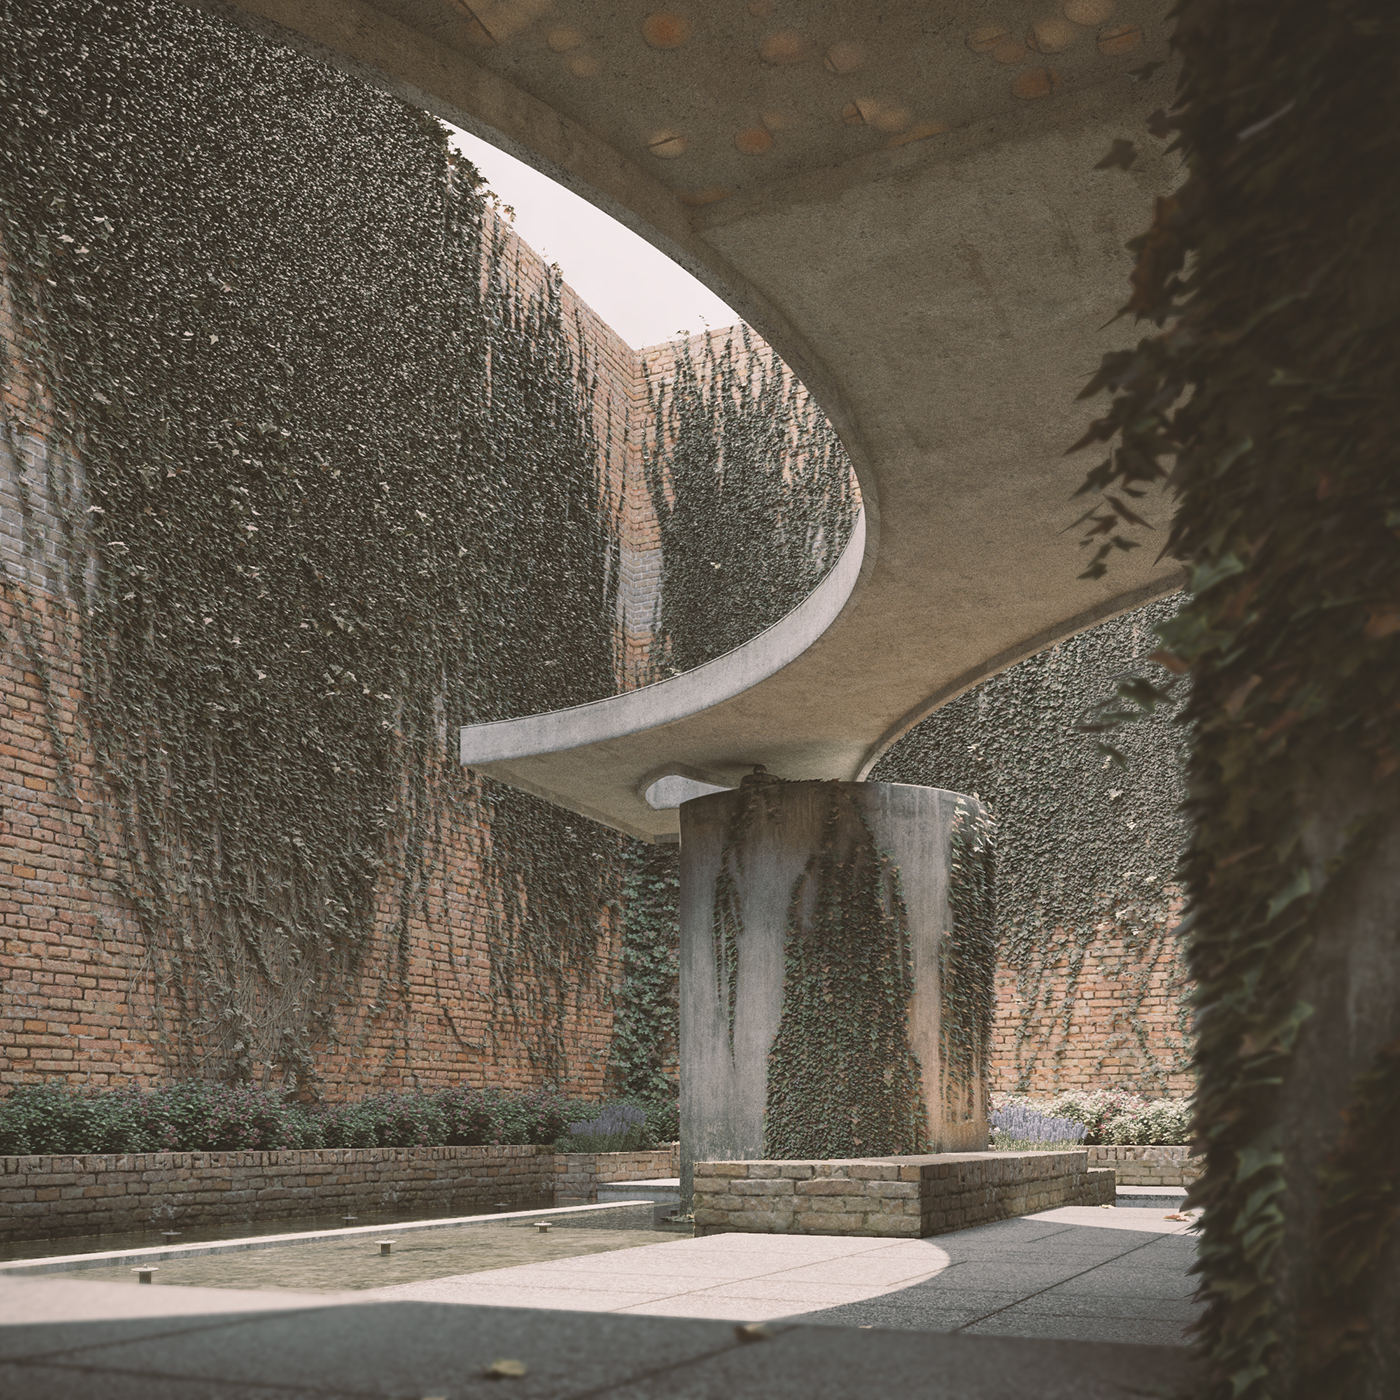 Giardini delle sculture Carlo scarpa Render 3dsmax corona renderer photoshop postproduction architerct venezia inspire